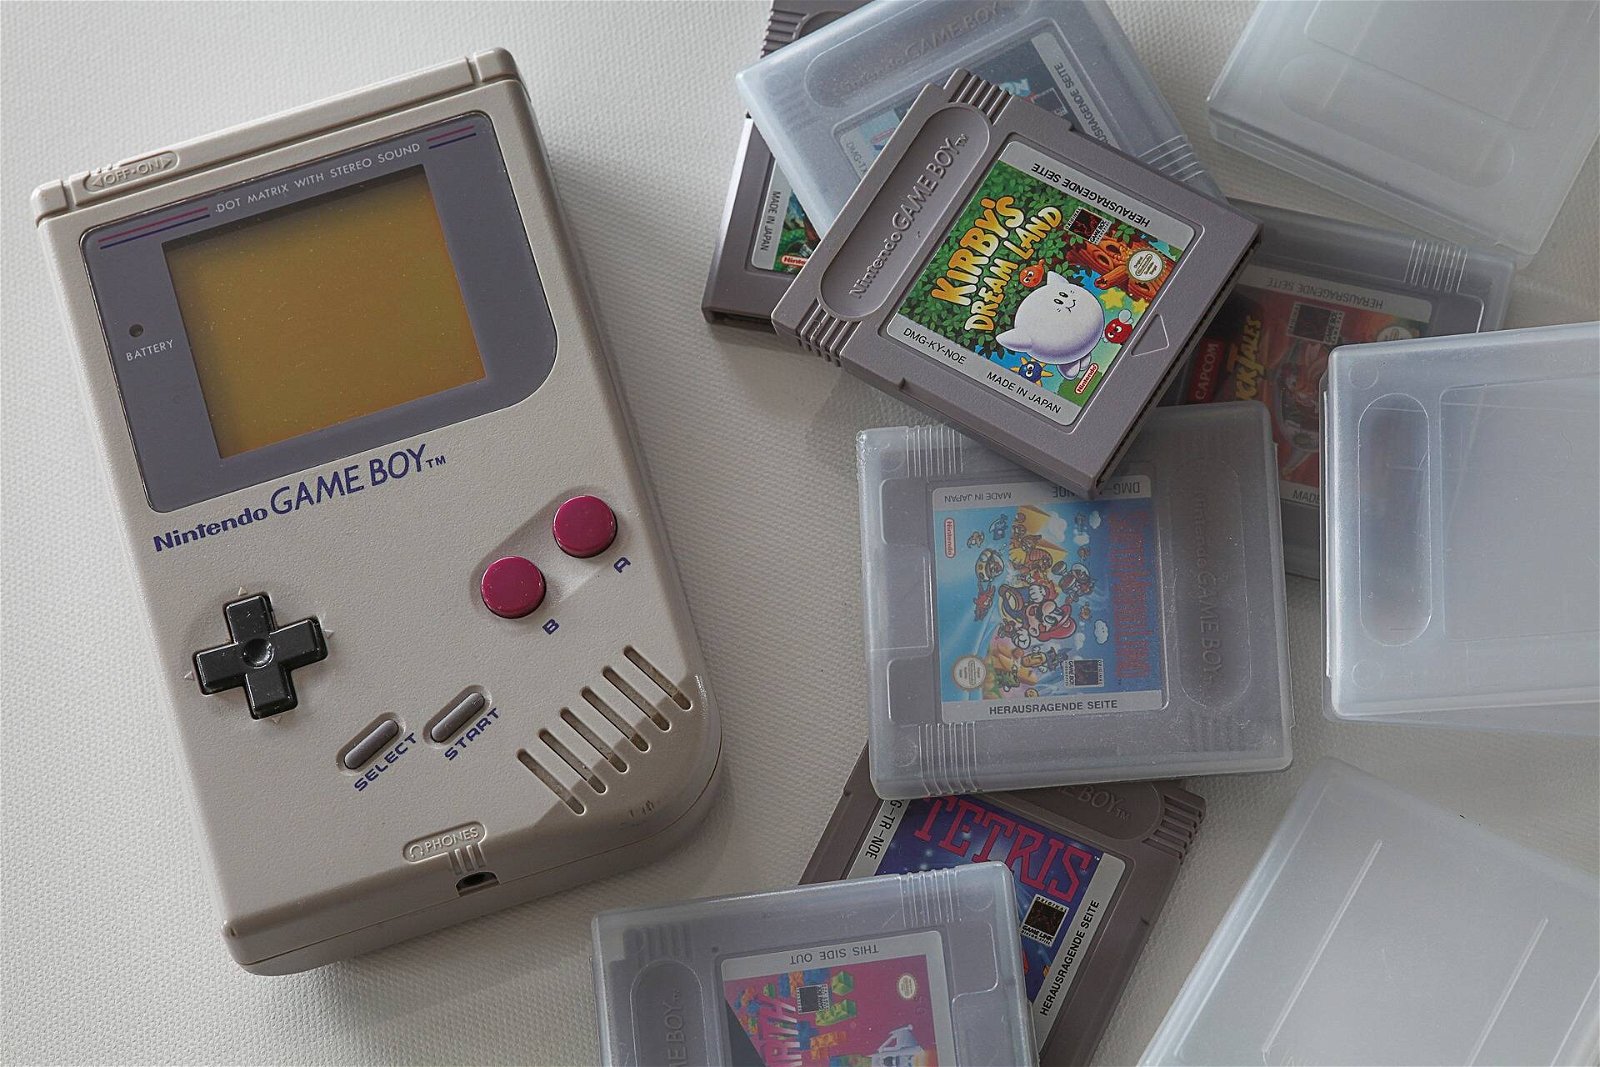 Nintendo Switch Online – Disponibili giochi Game Boy e Game Boy